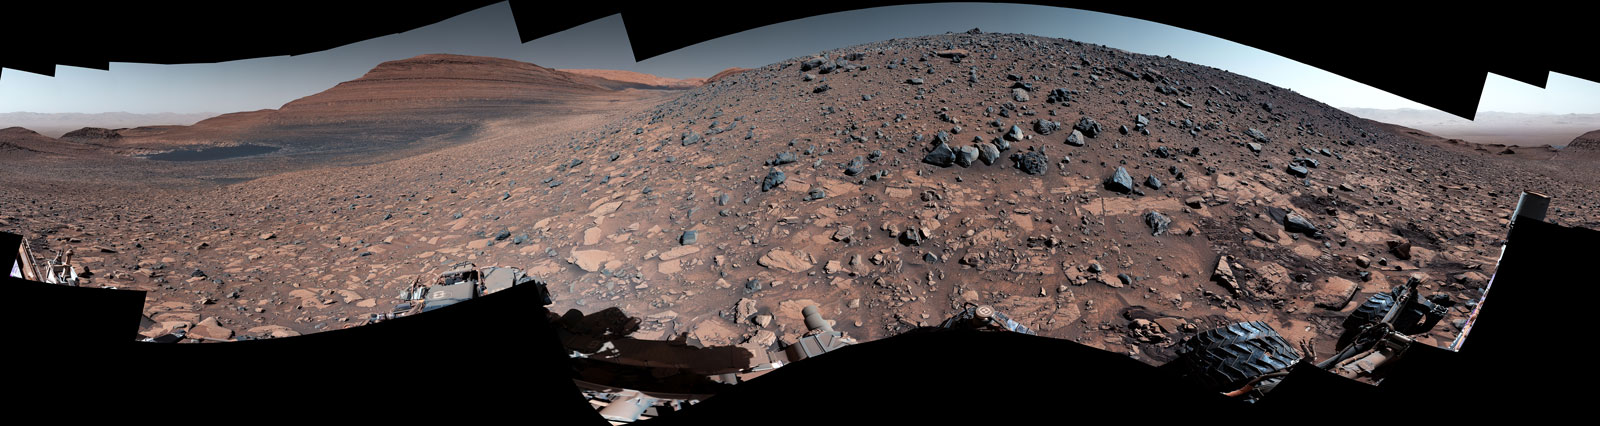 slide 5 - Curiosity Reaches Mars Ridge Where Water Left Debris Pileup